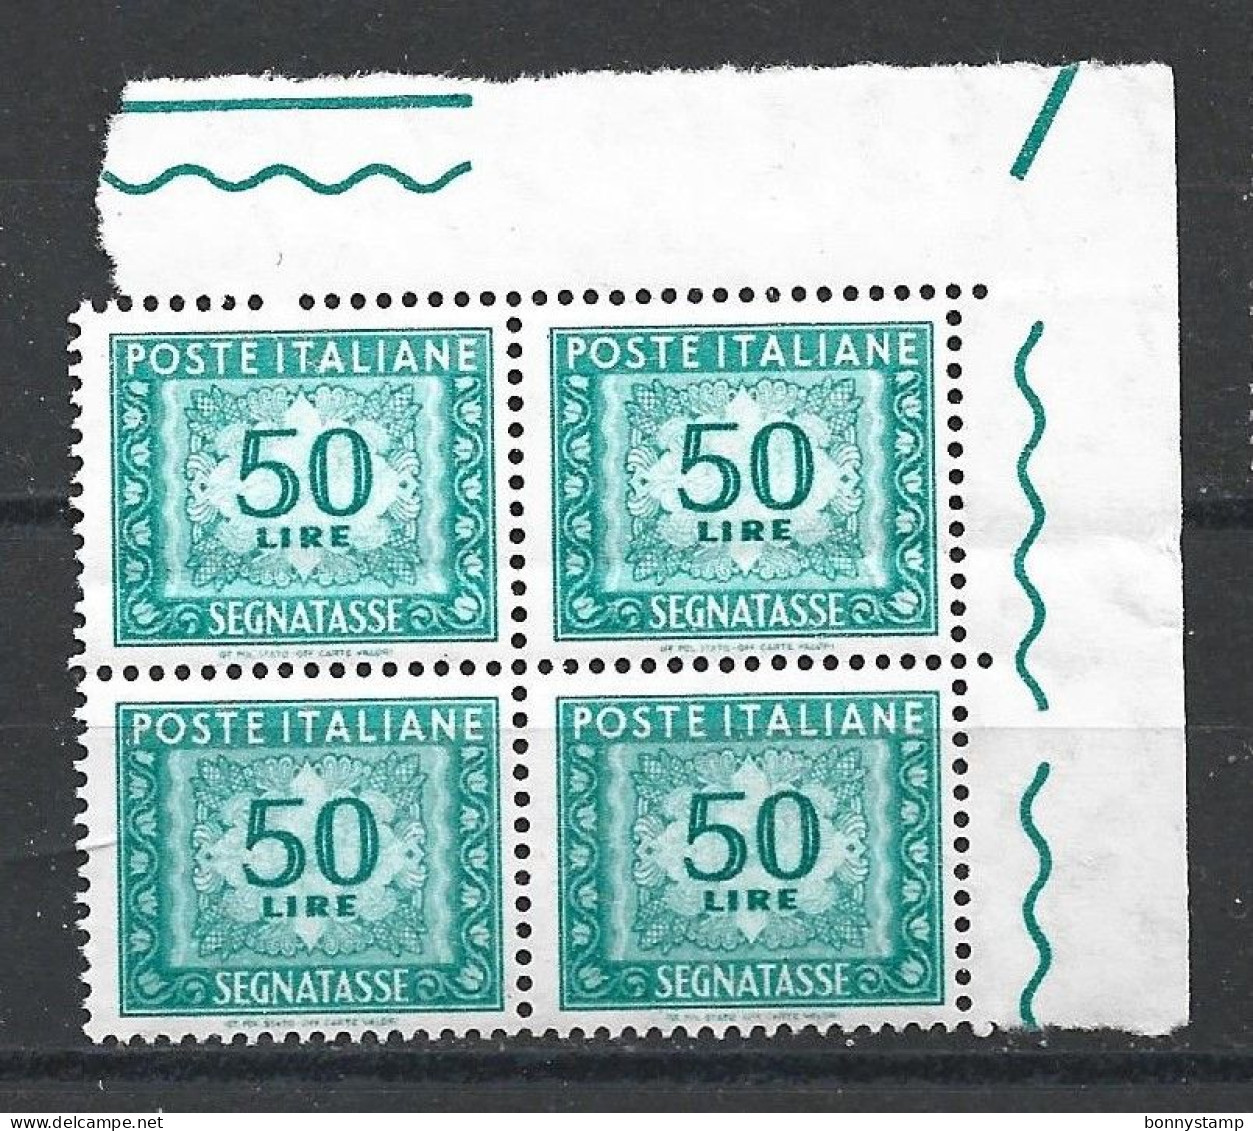 Repubblica Italiana, 1955/66 - 50 Lire Segnatasse, Fil. Stelle, Quartina - Nr.118 MNH** - Postage Due